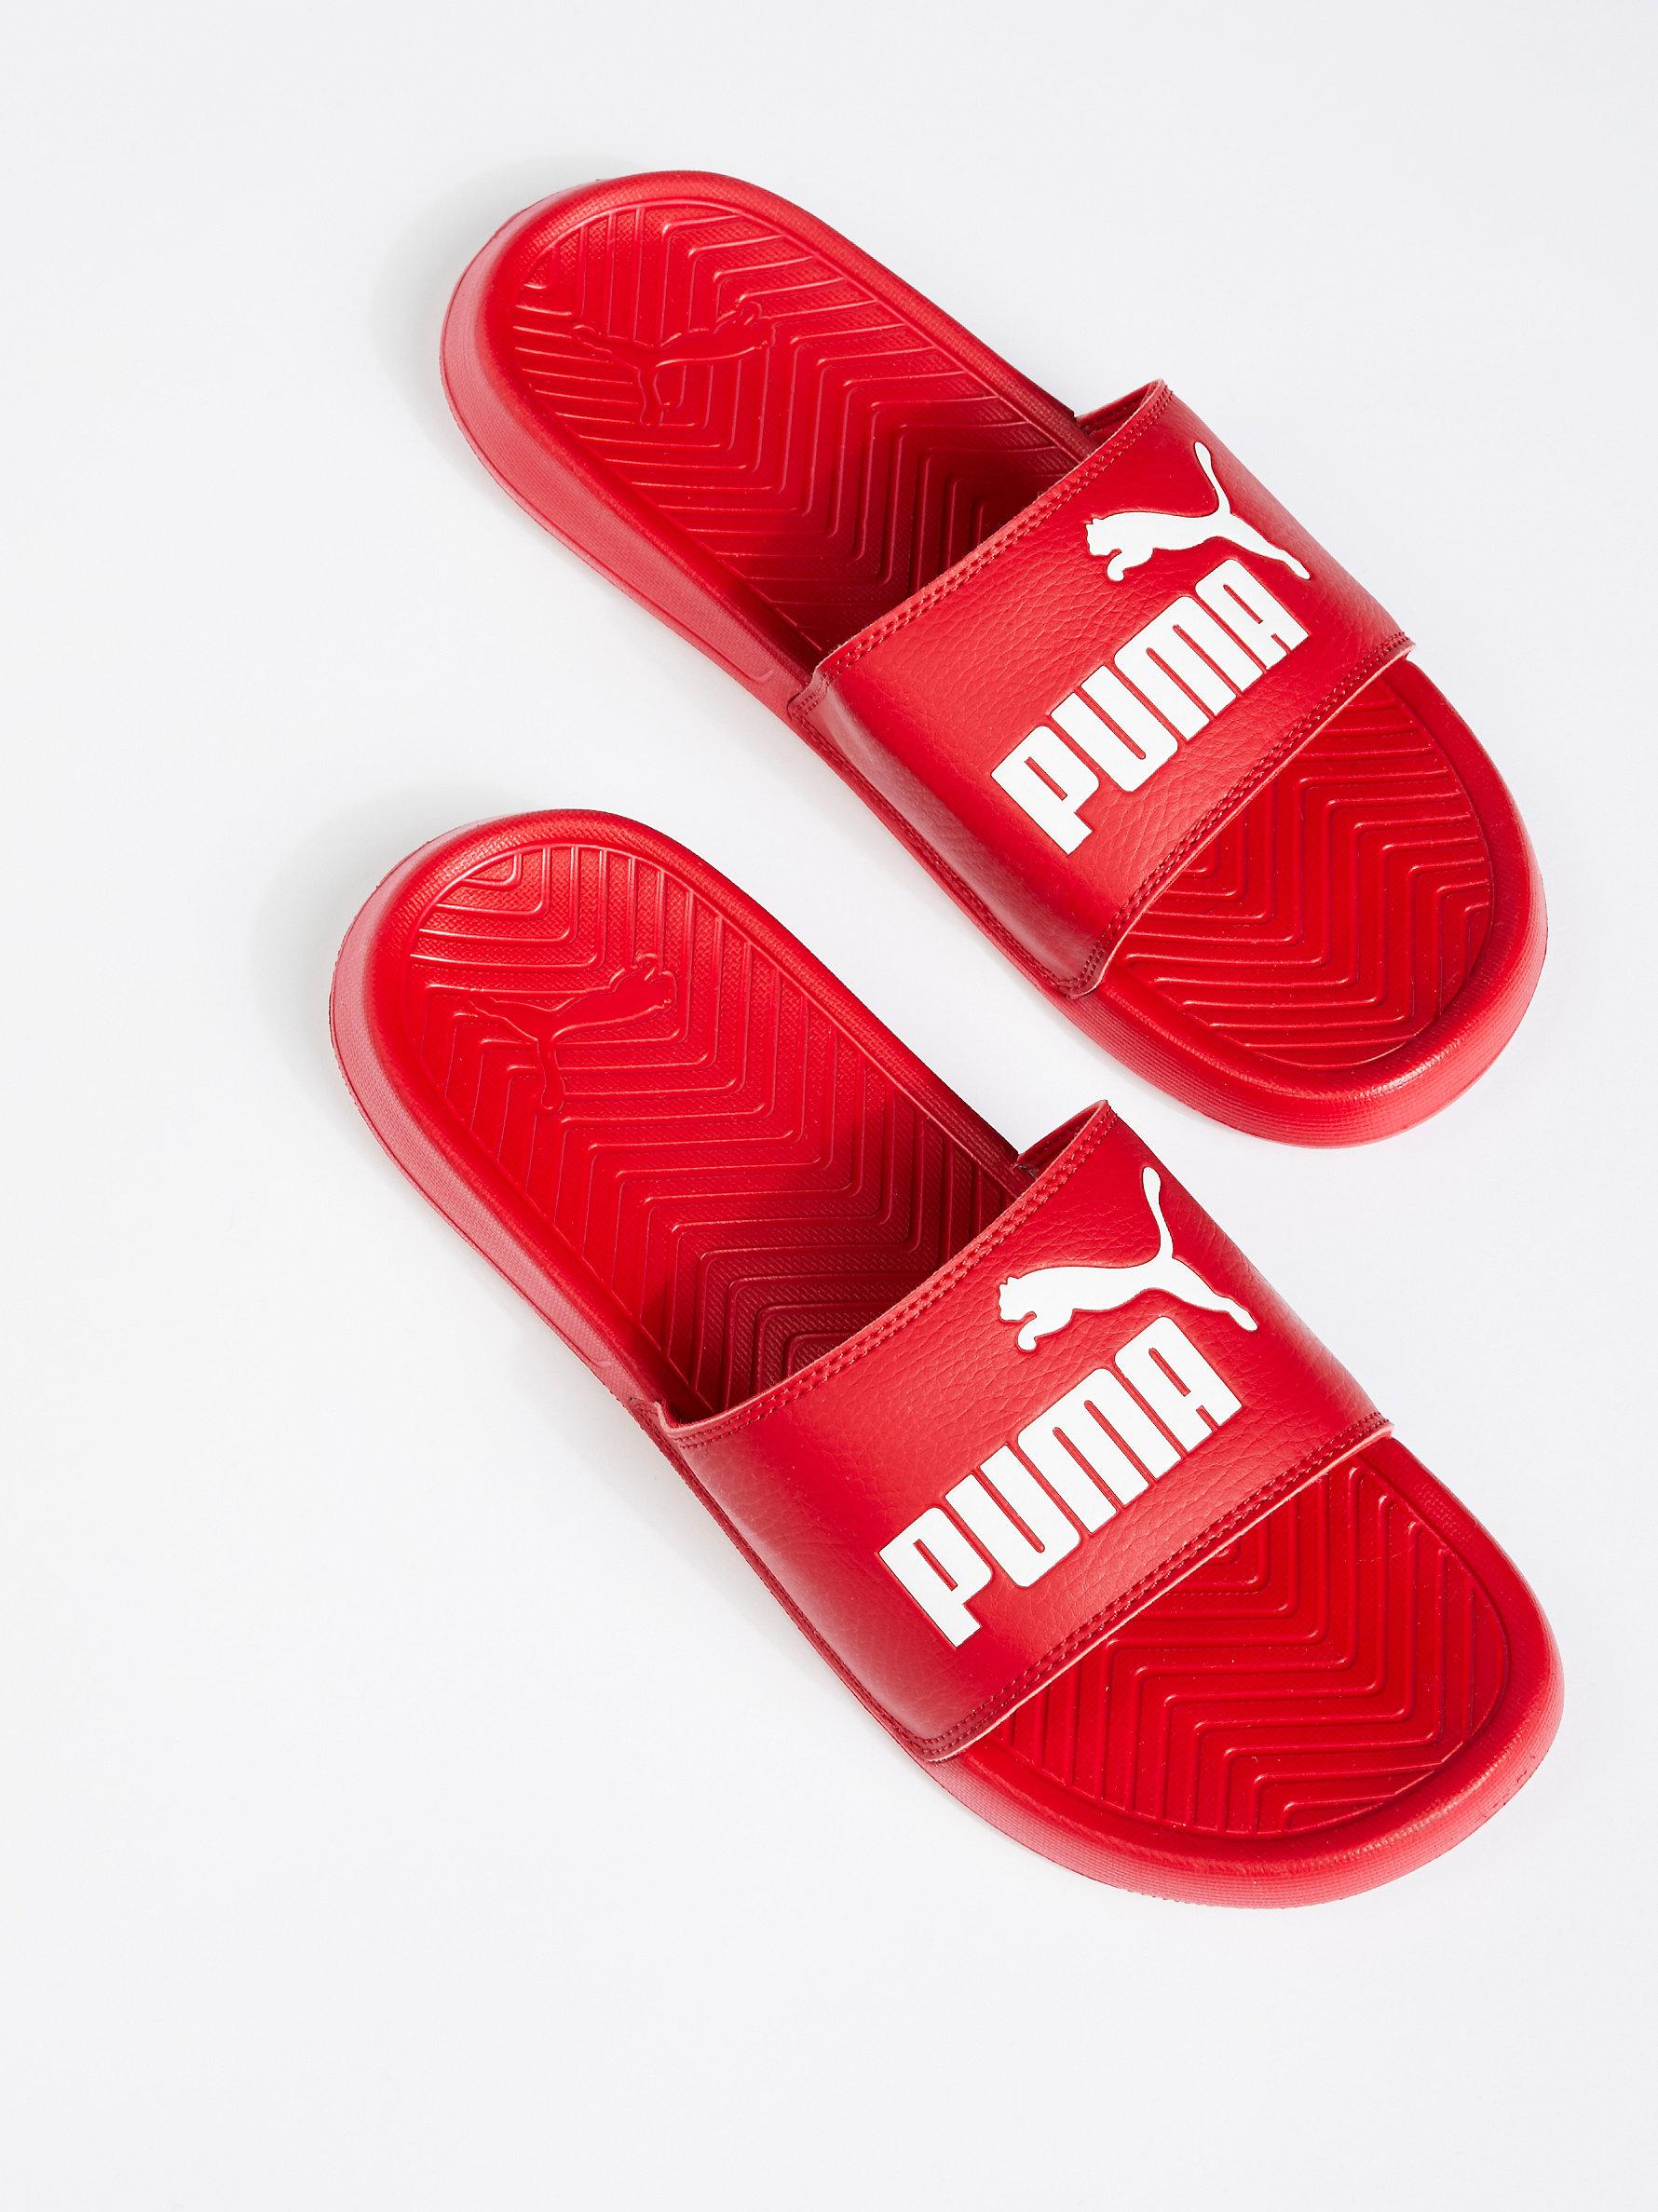 red puma slides